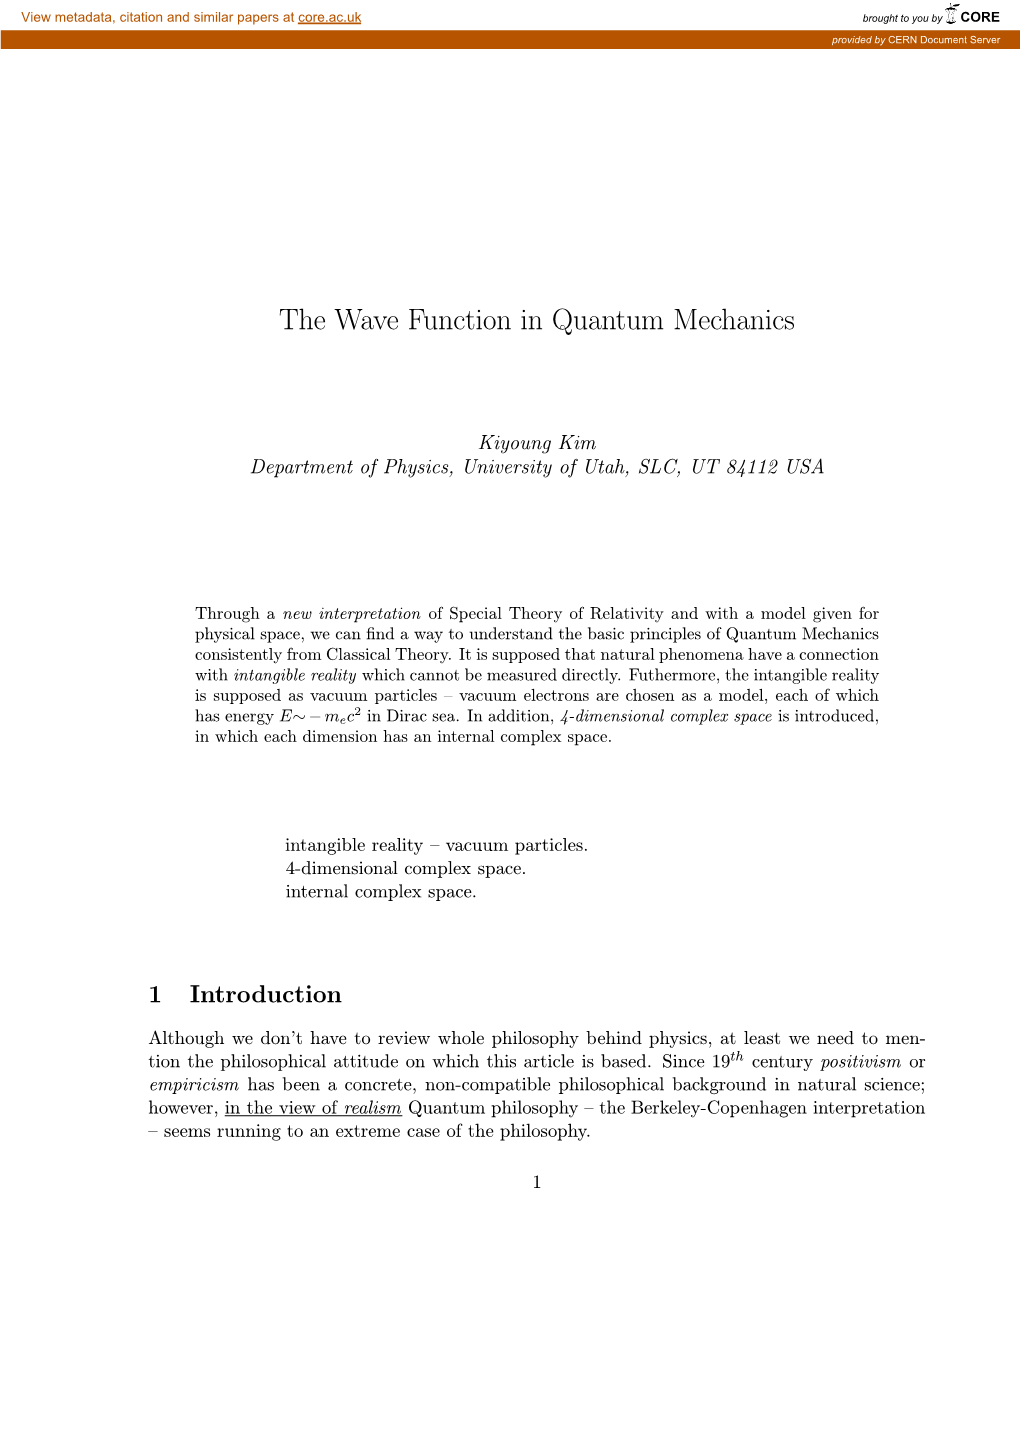 The Wave Function in Quantum Mechanics